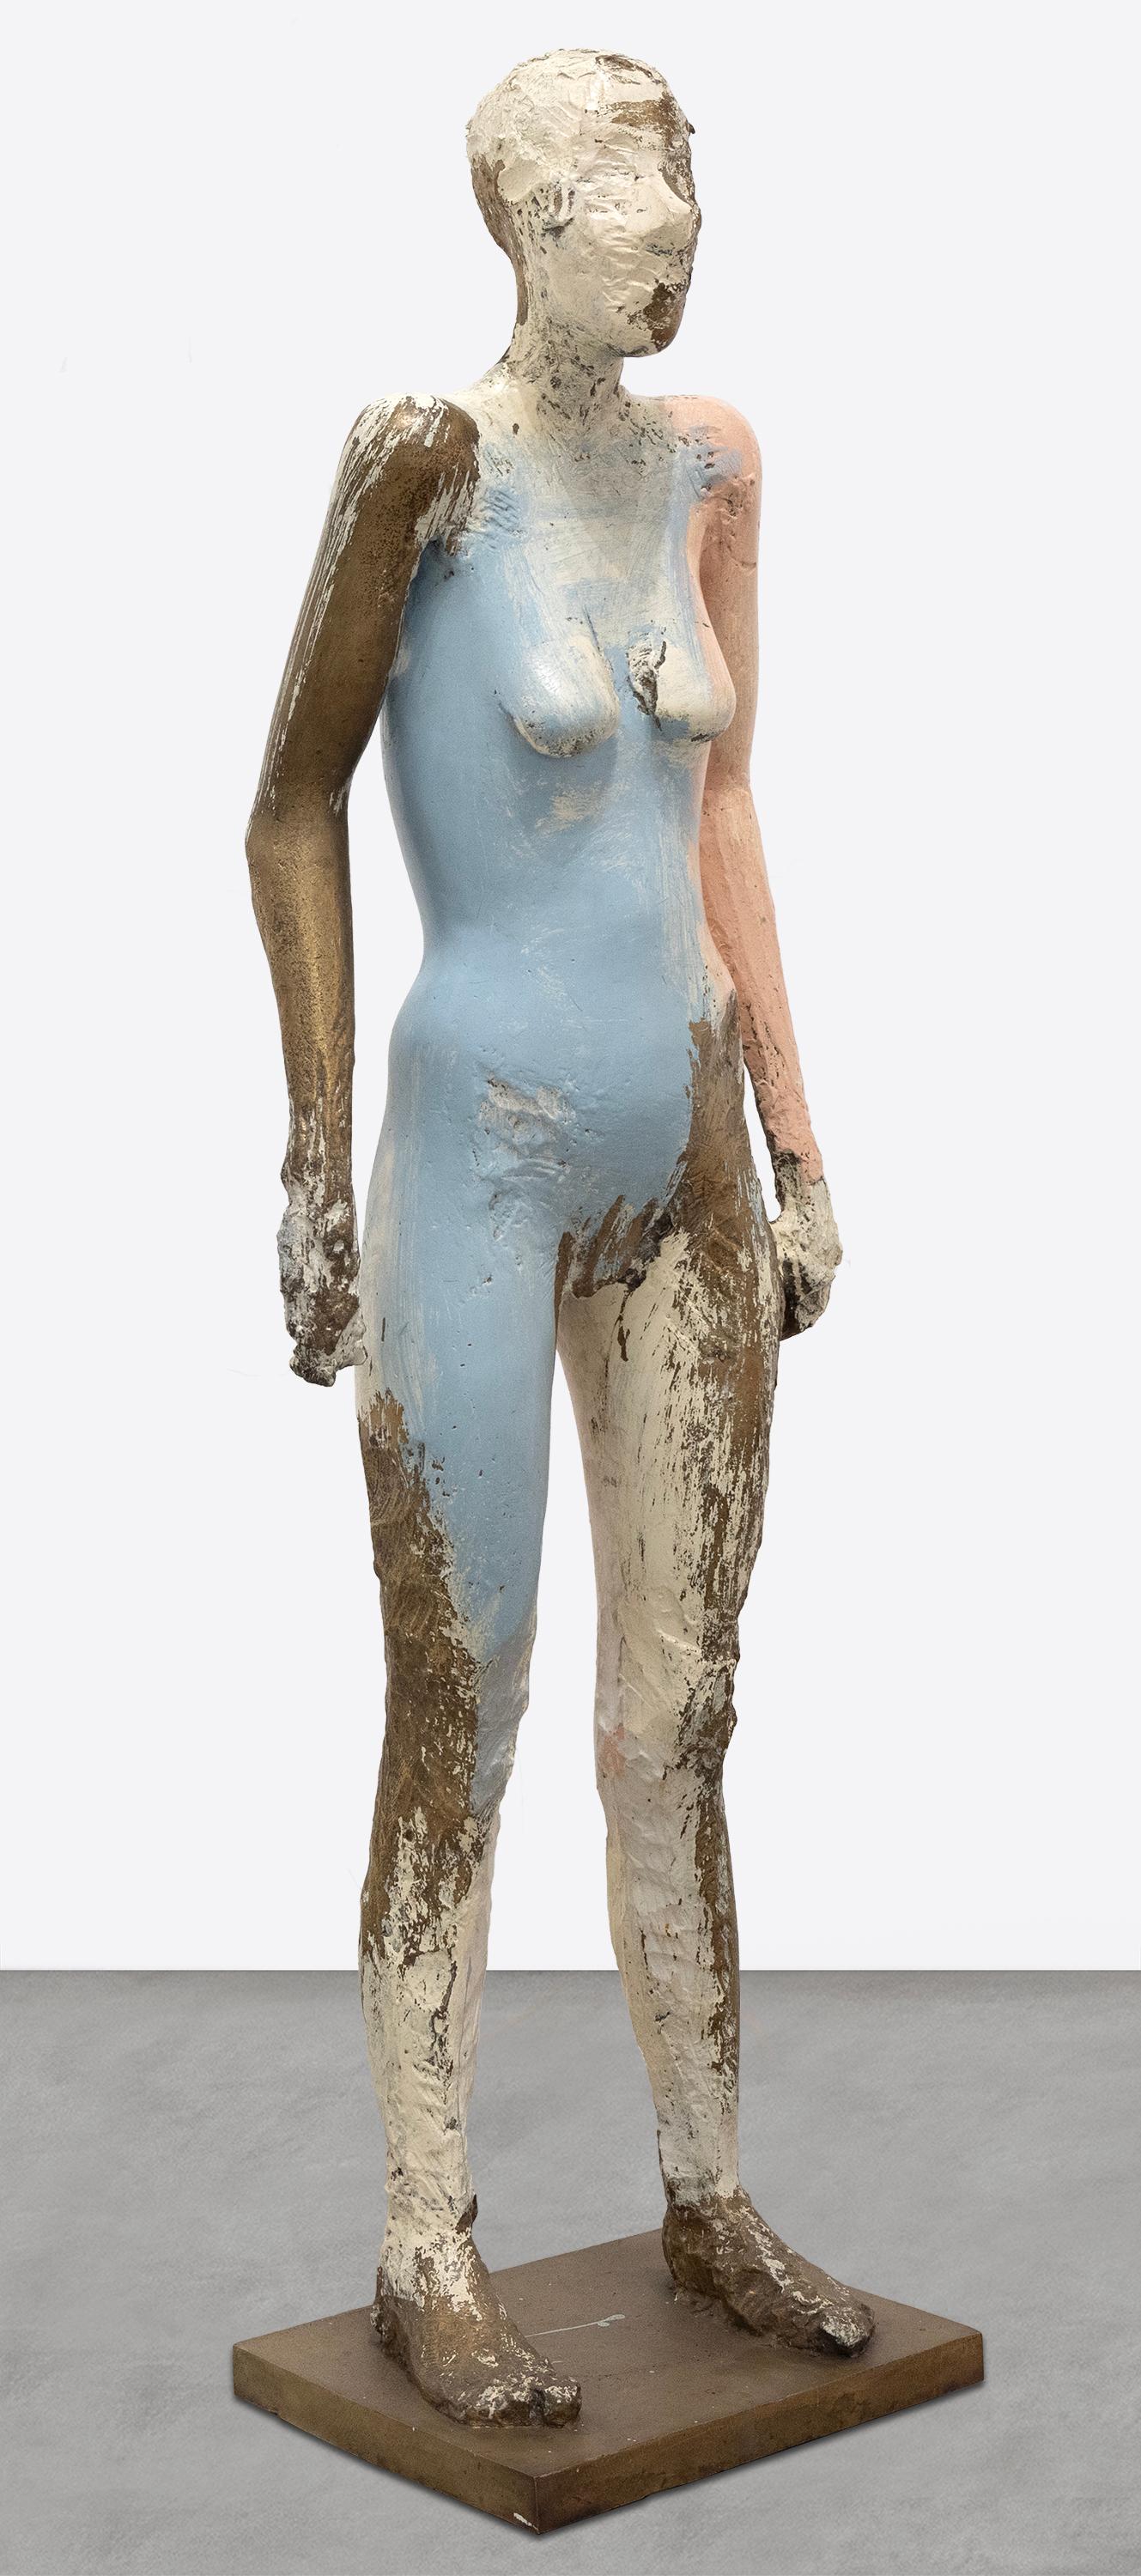 Manuel Neri Figurative Sculpture – Standfigur Nr. 3 ohne Titel